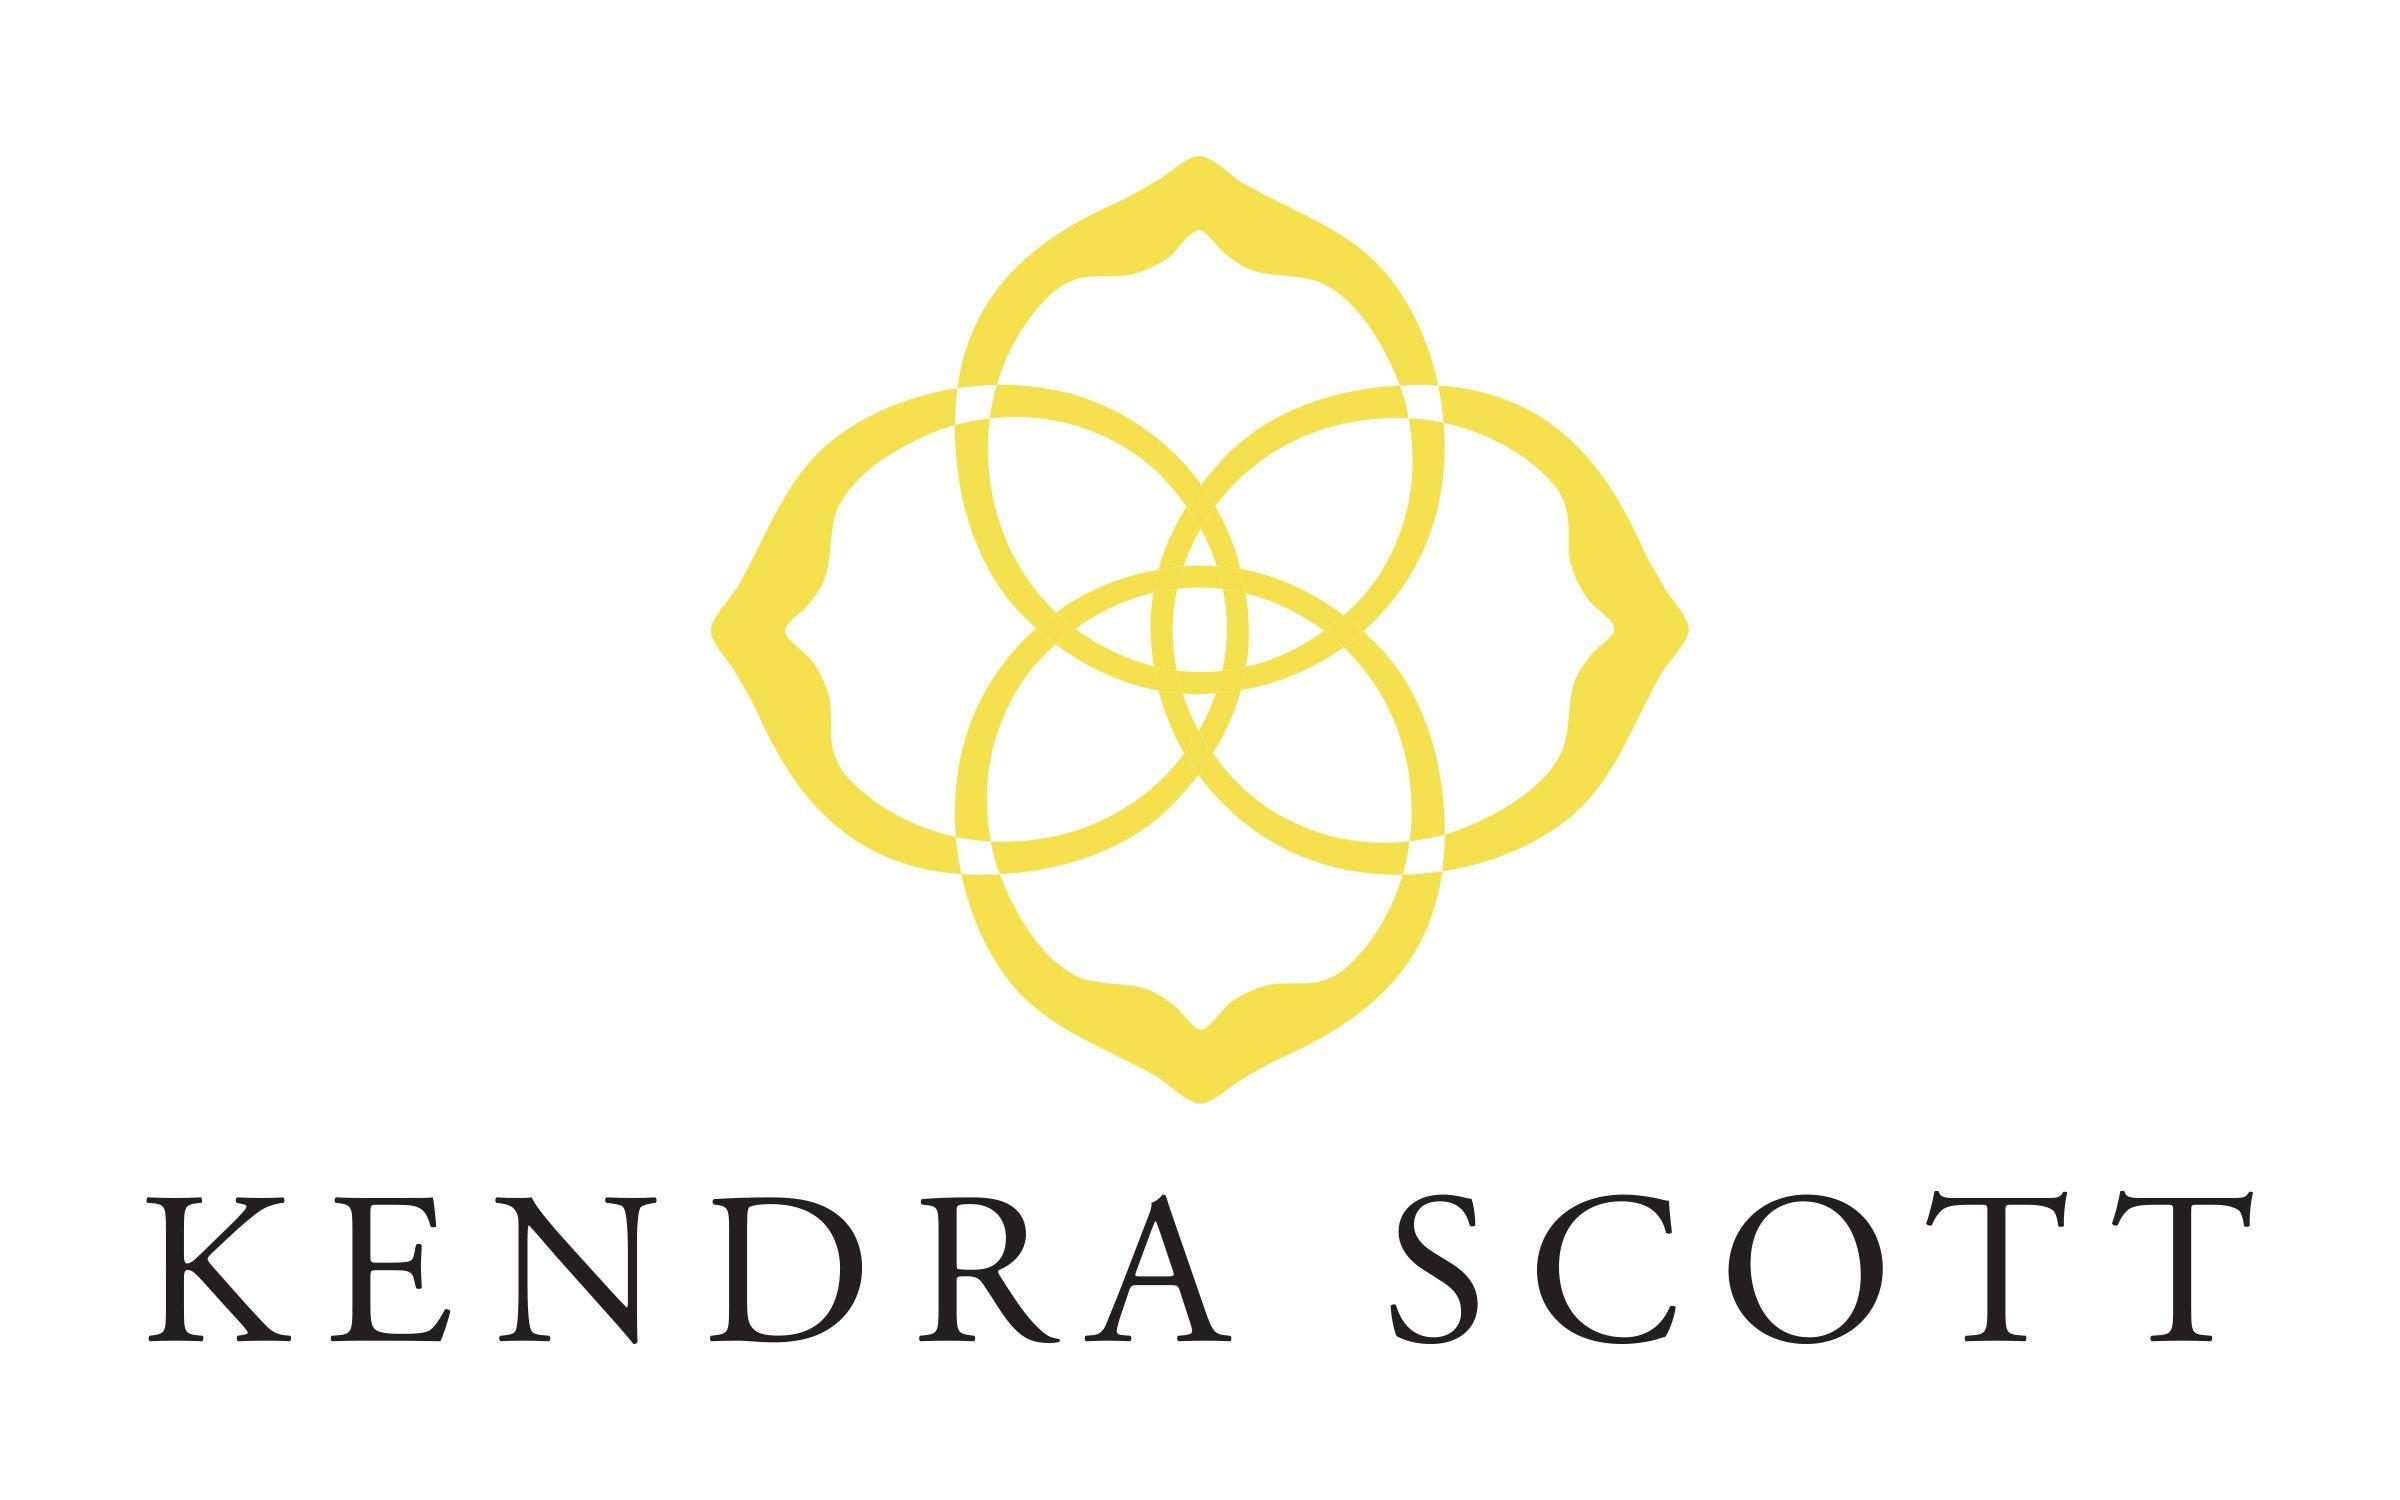 Scott Name Logo - Kendra Scott Logo Step and Repeat 2 Women's Clinic